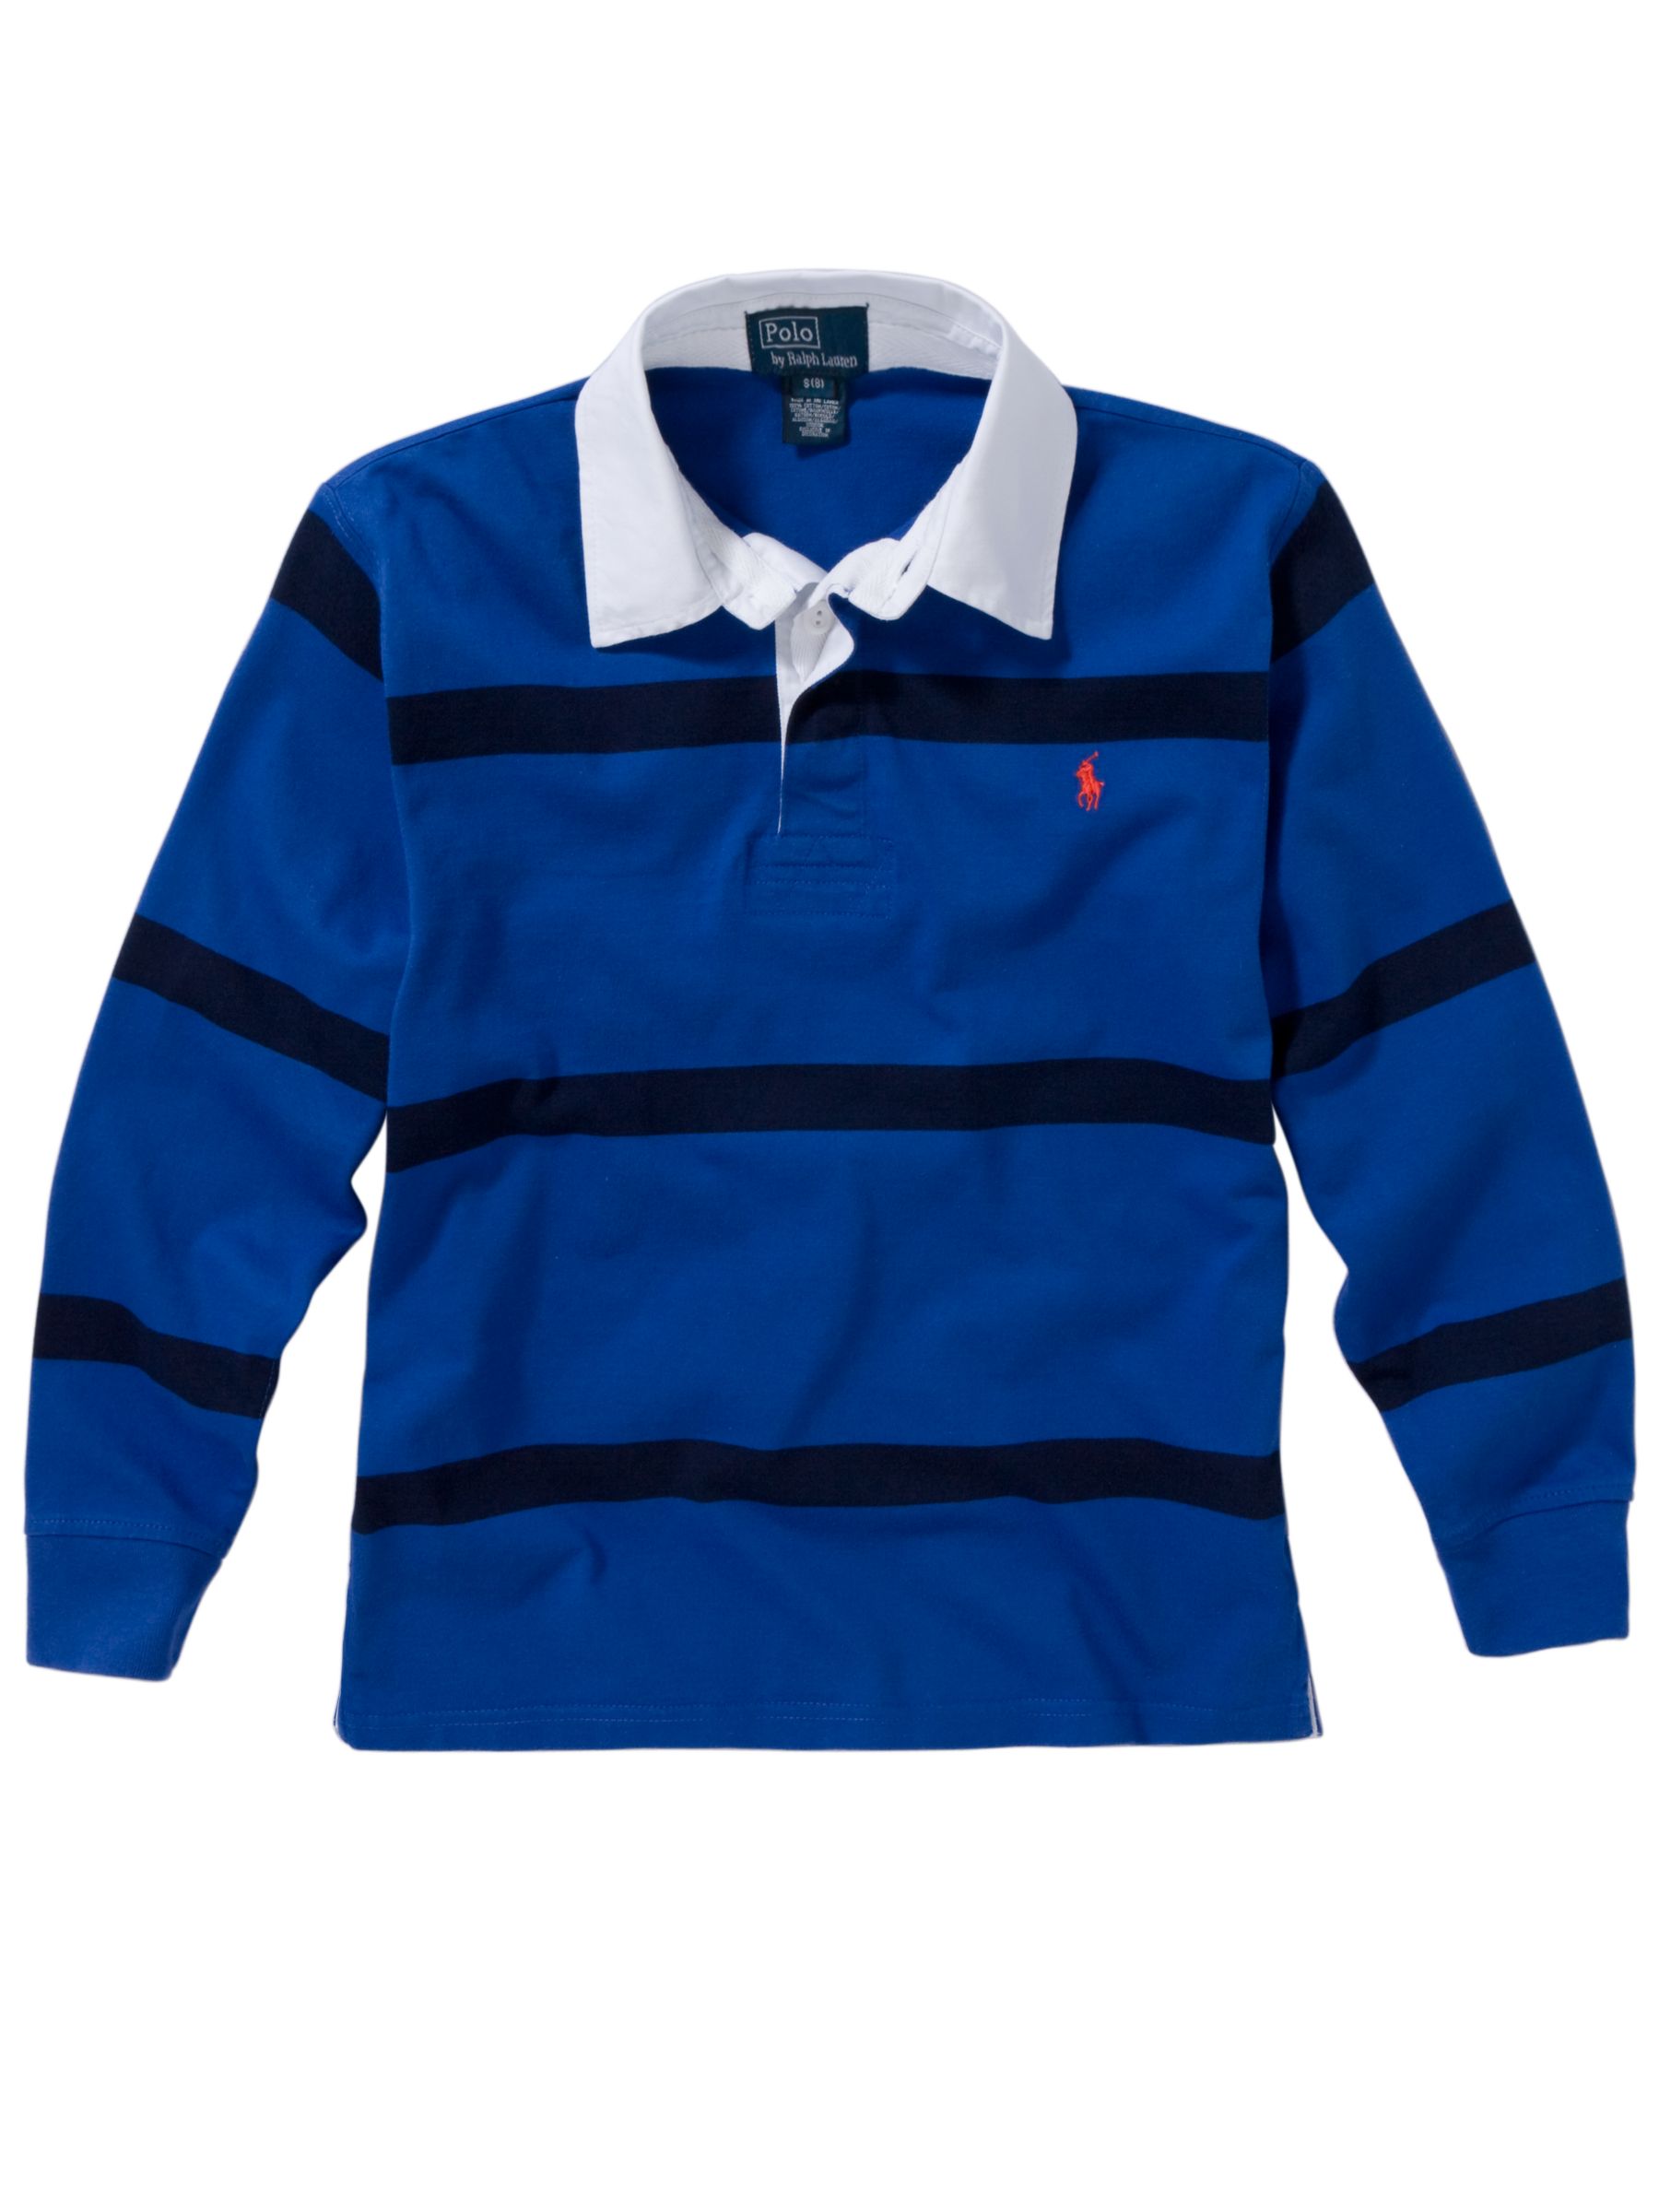 Polo Ralph Lauren Rugby Shirt, Blue, 7 years